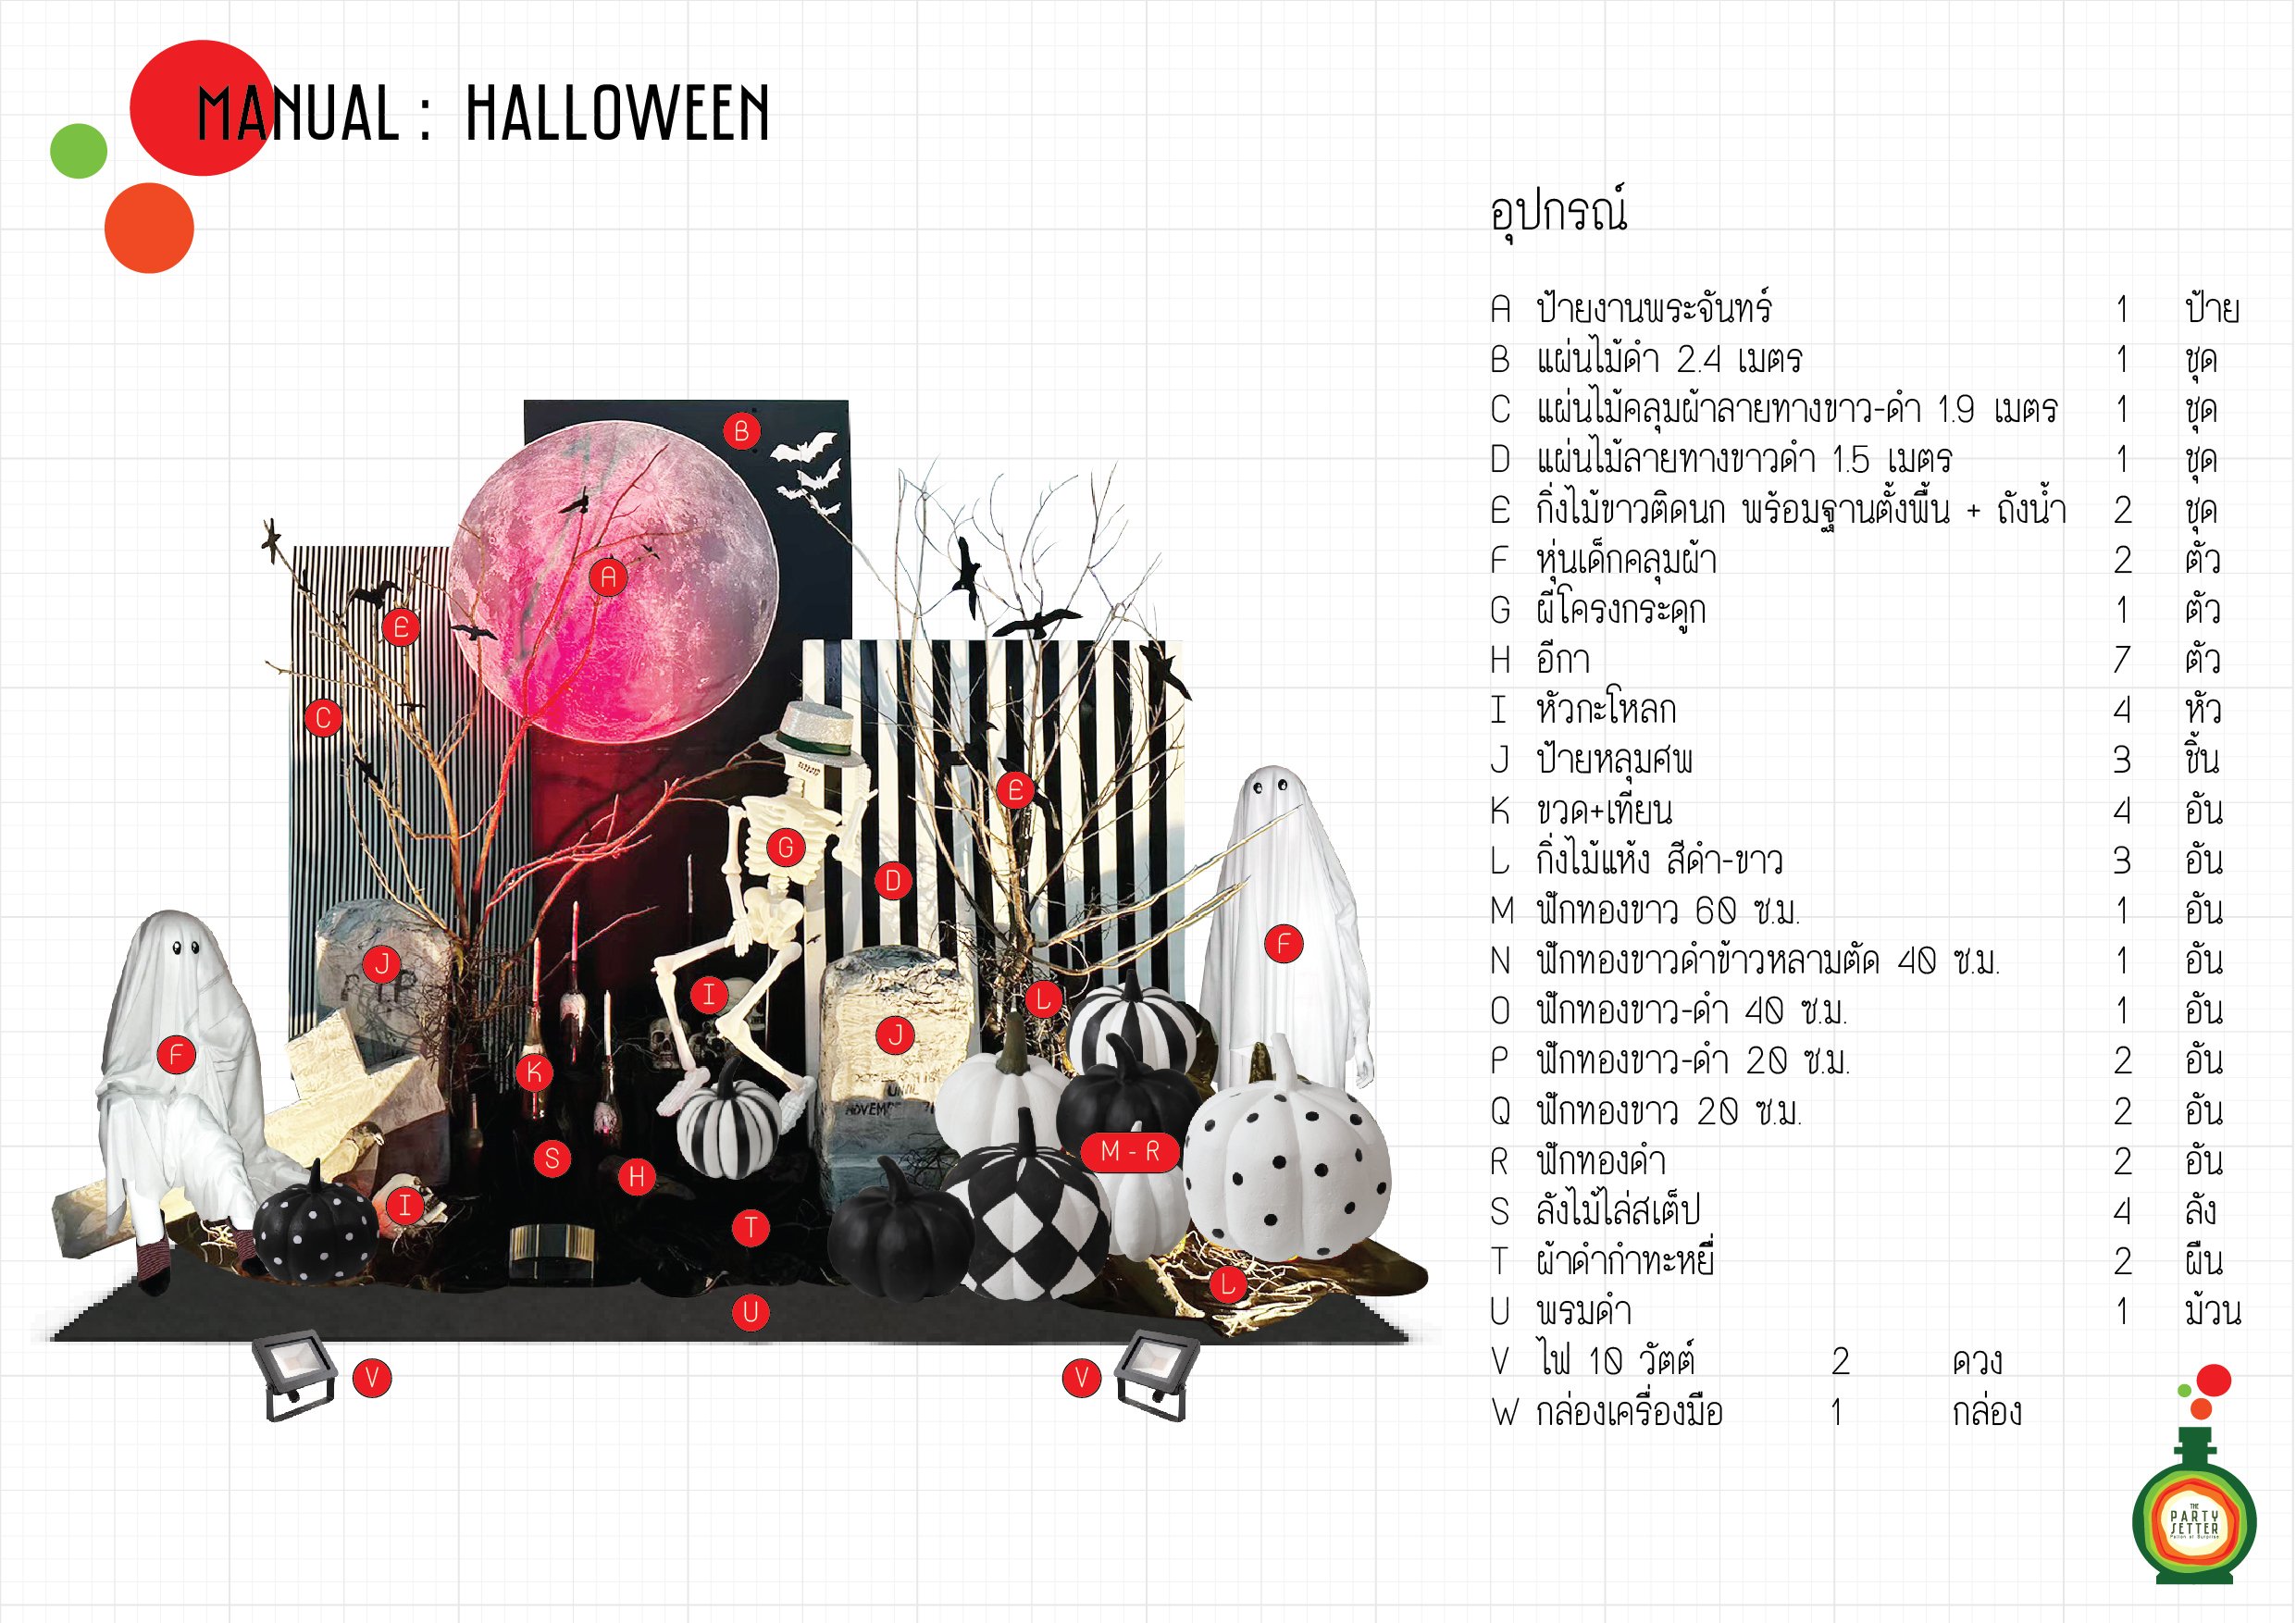 Manual_Halloween_03-00-01.jpg